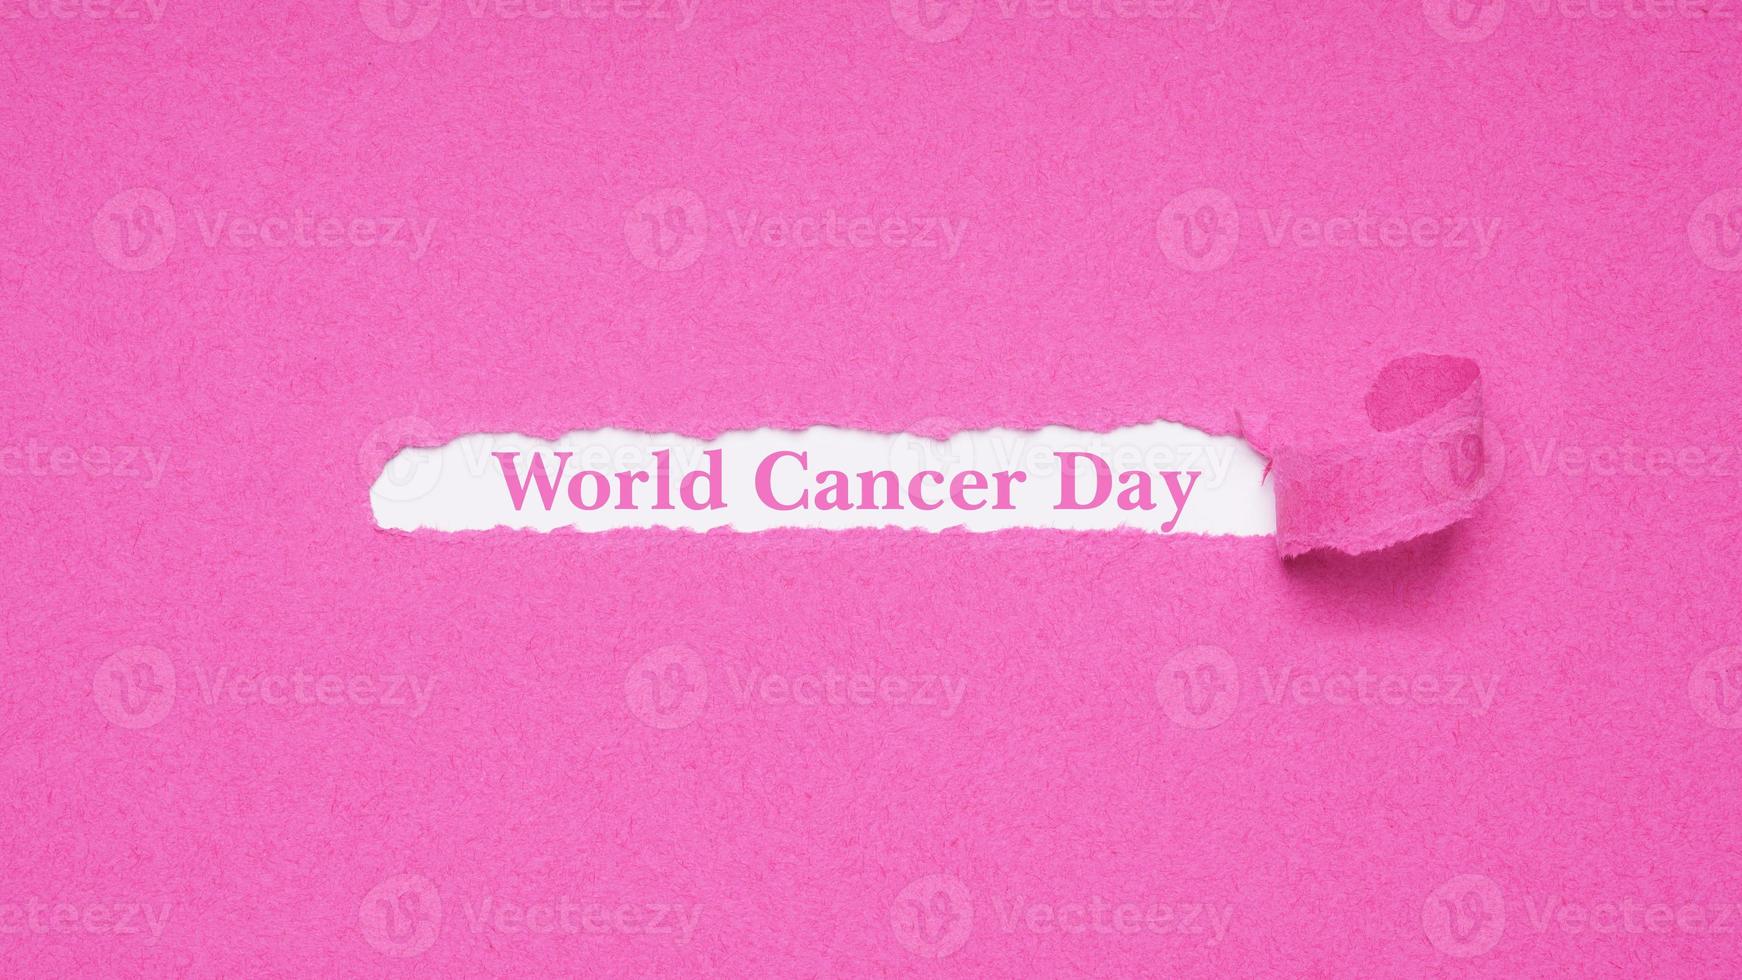 World Cancer Day to raise awareness photo